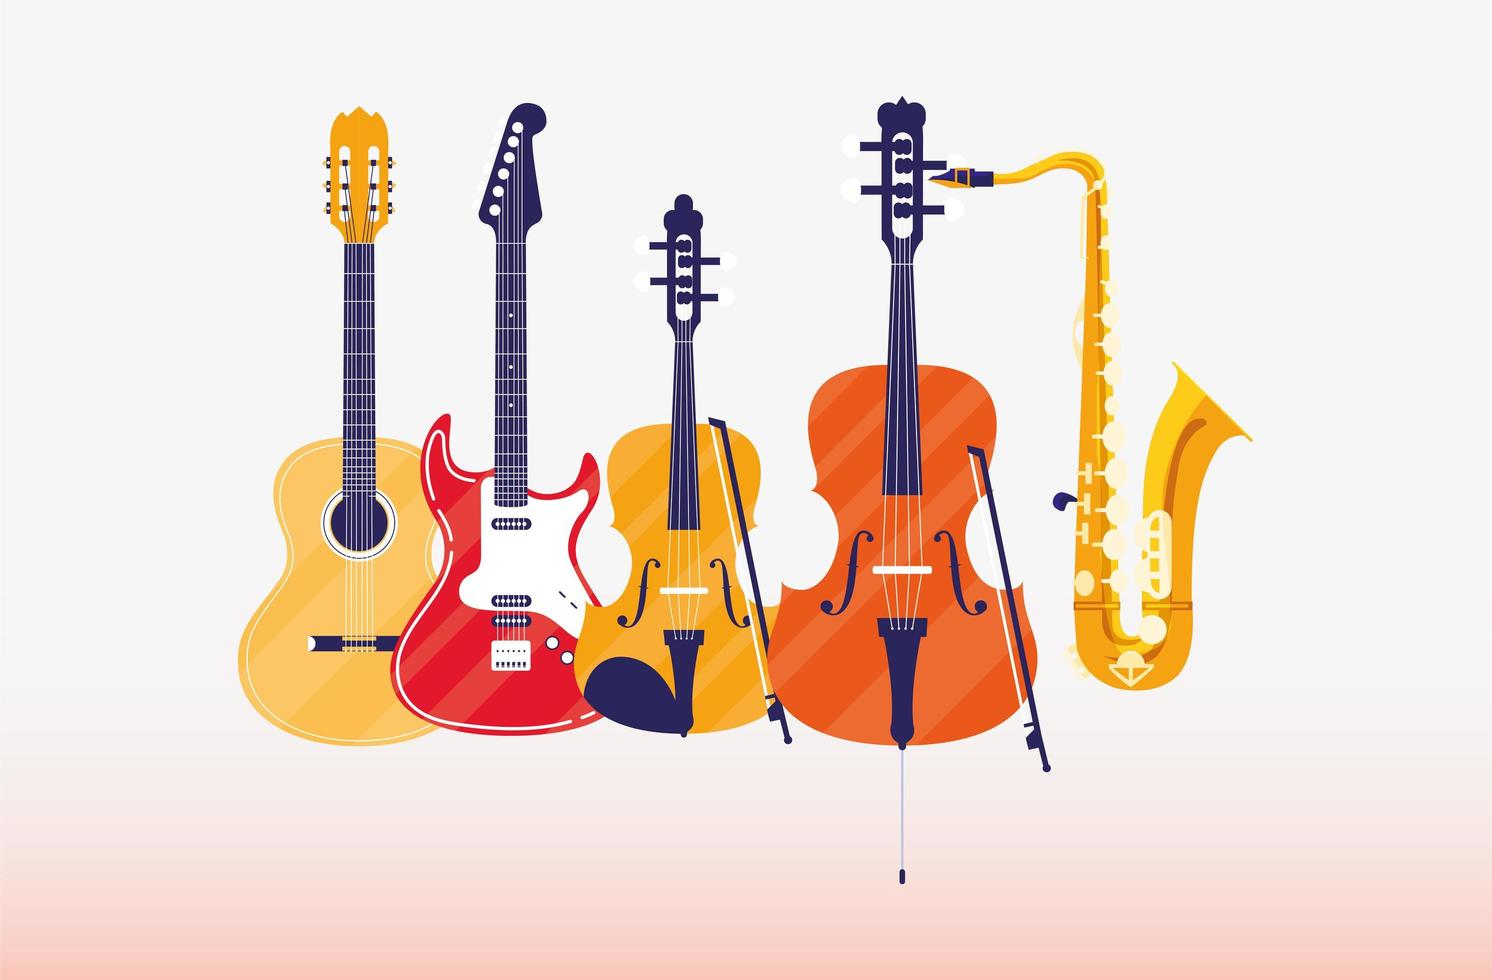 Guitar fiddle cello and saxophone instrument vector design